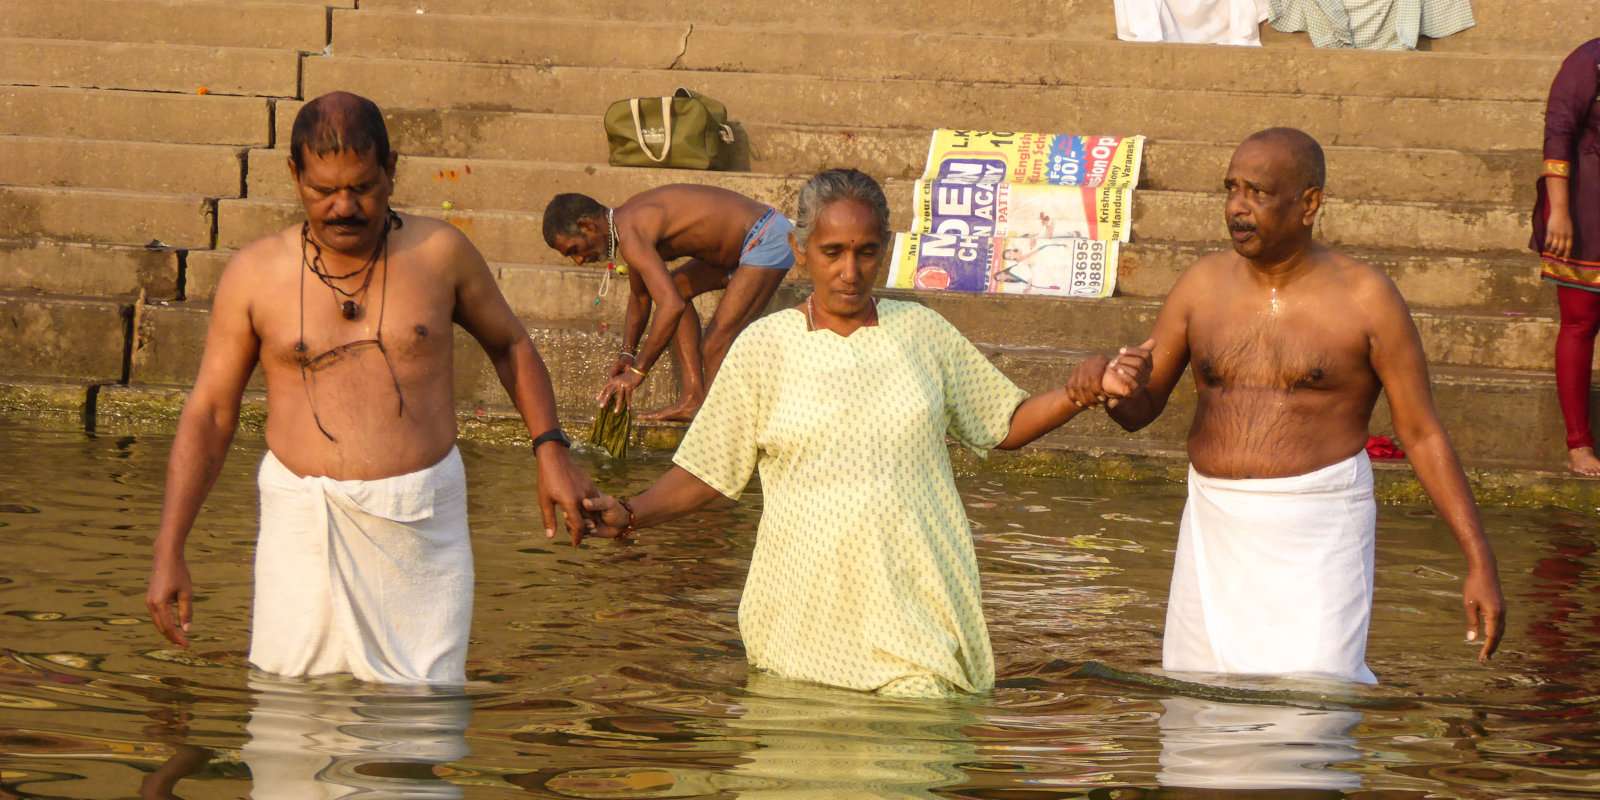 Hindu pilgrims praying and bathing by the ghats of Varanasi